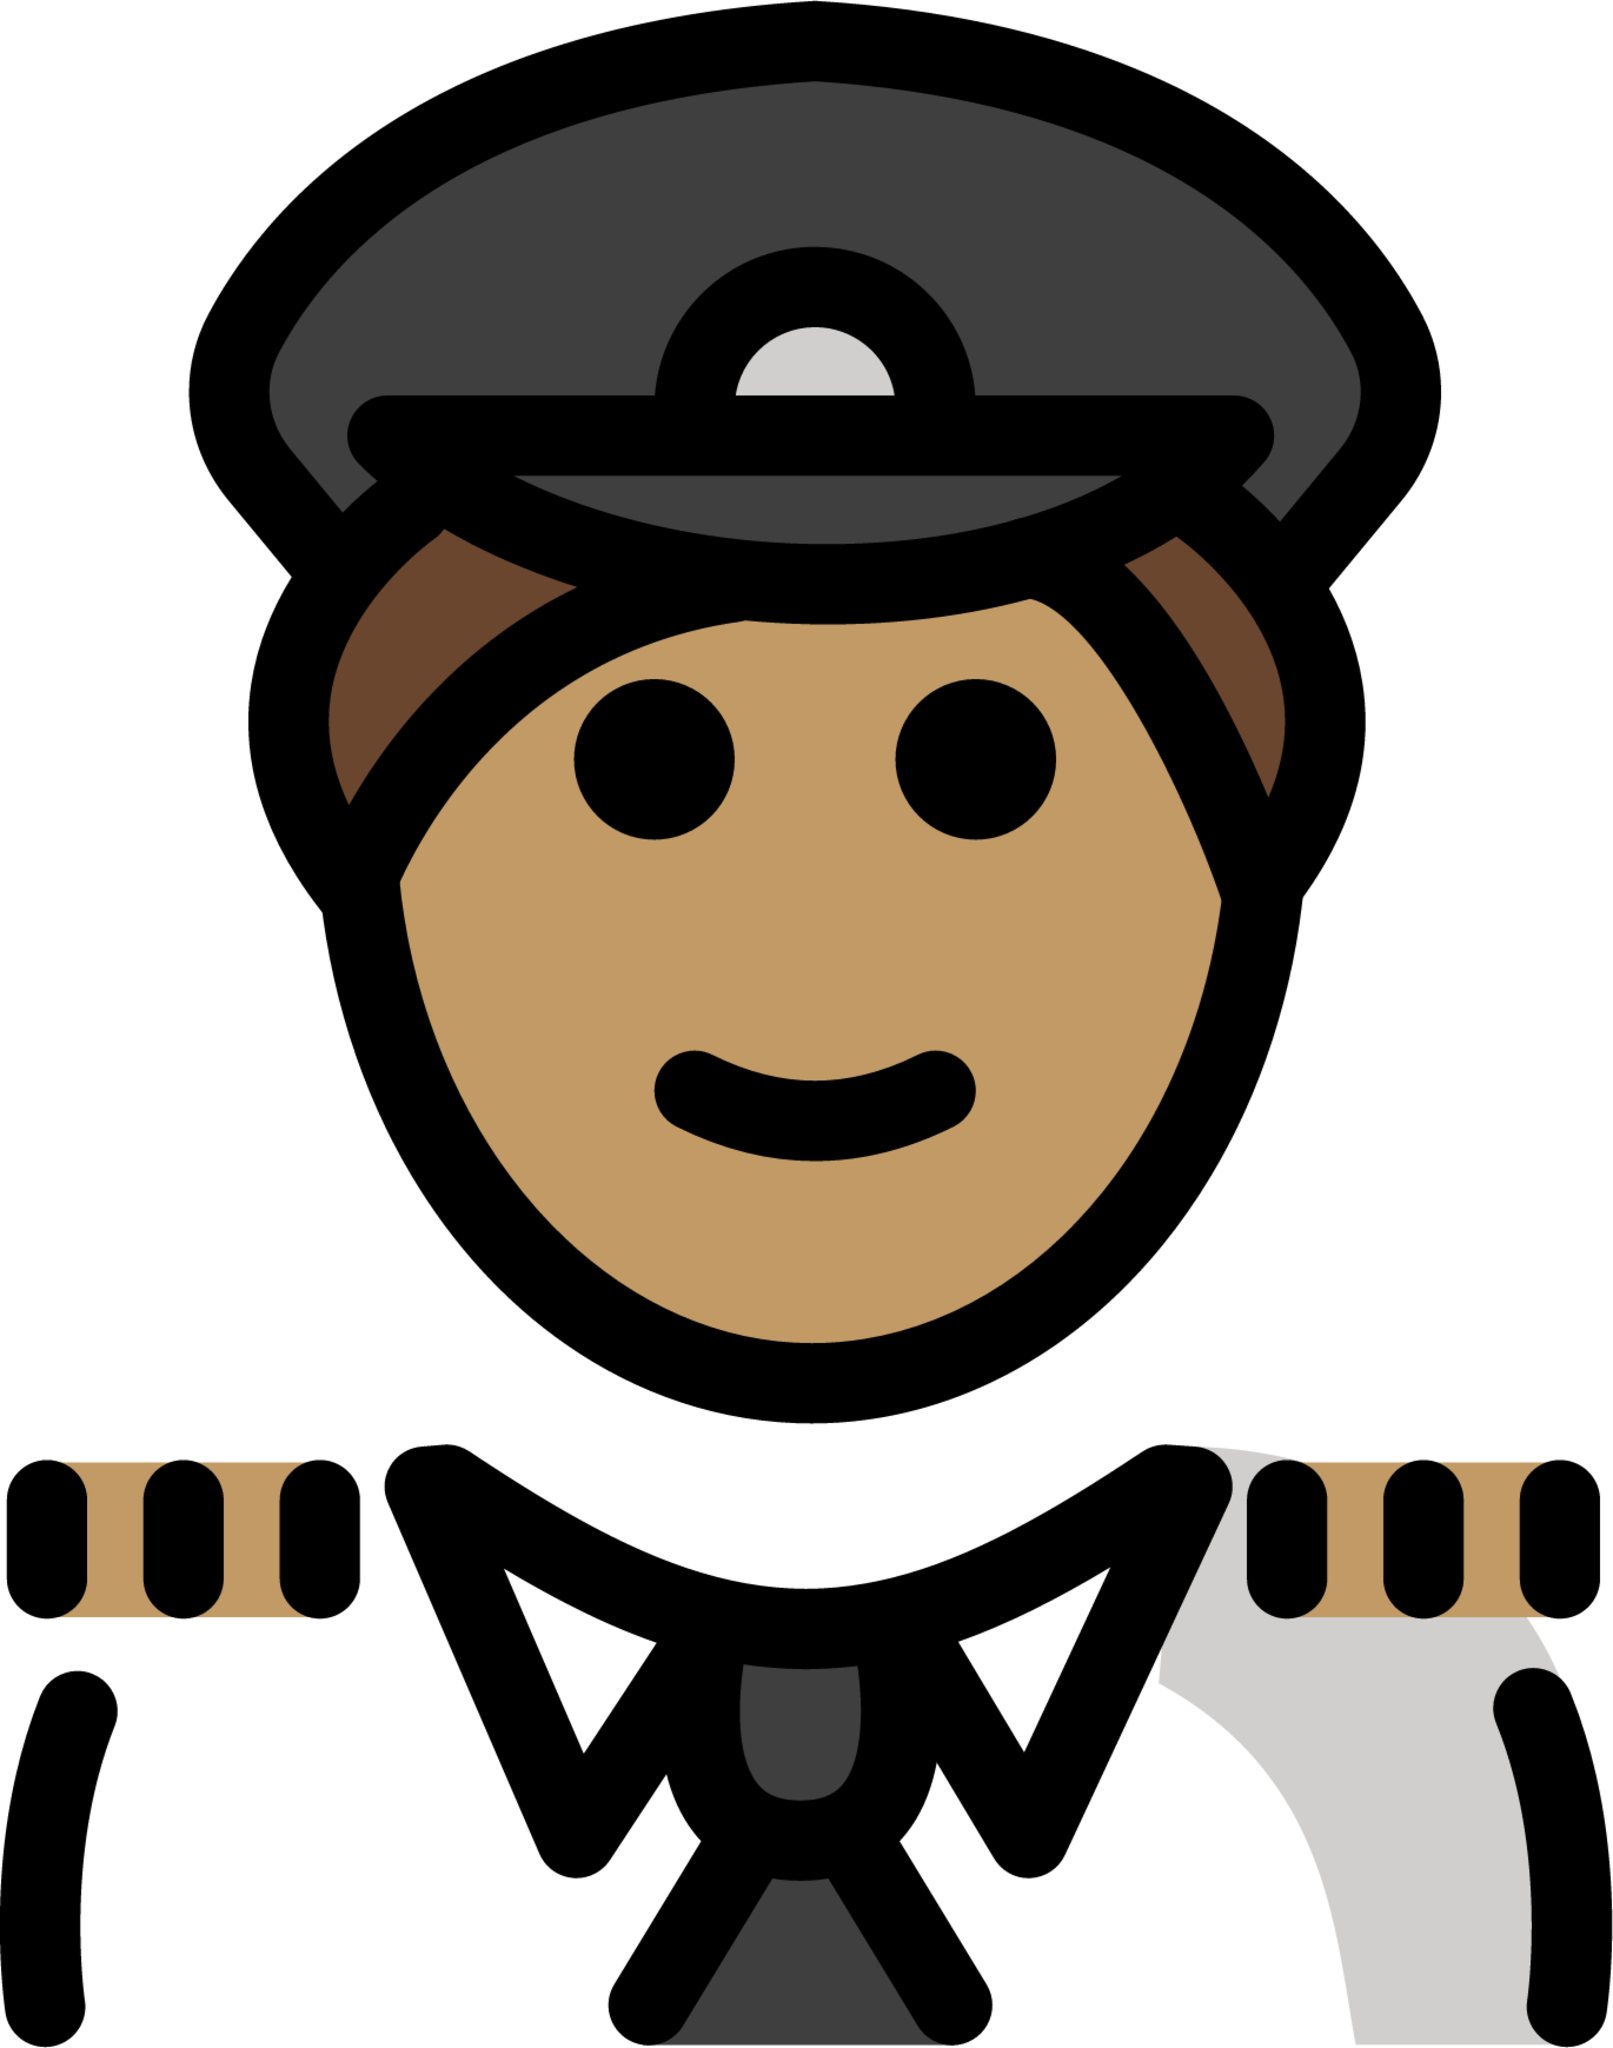 man pilot: medium skin tone emoji